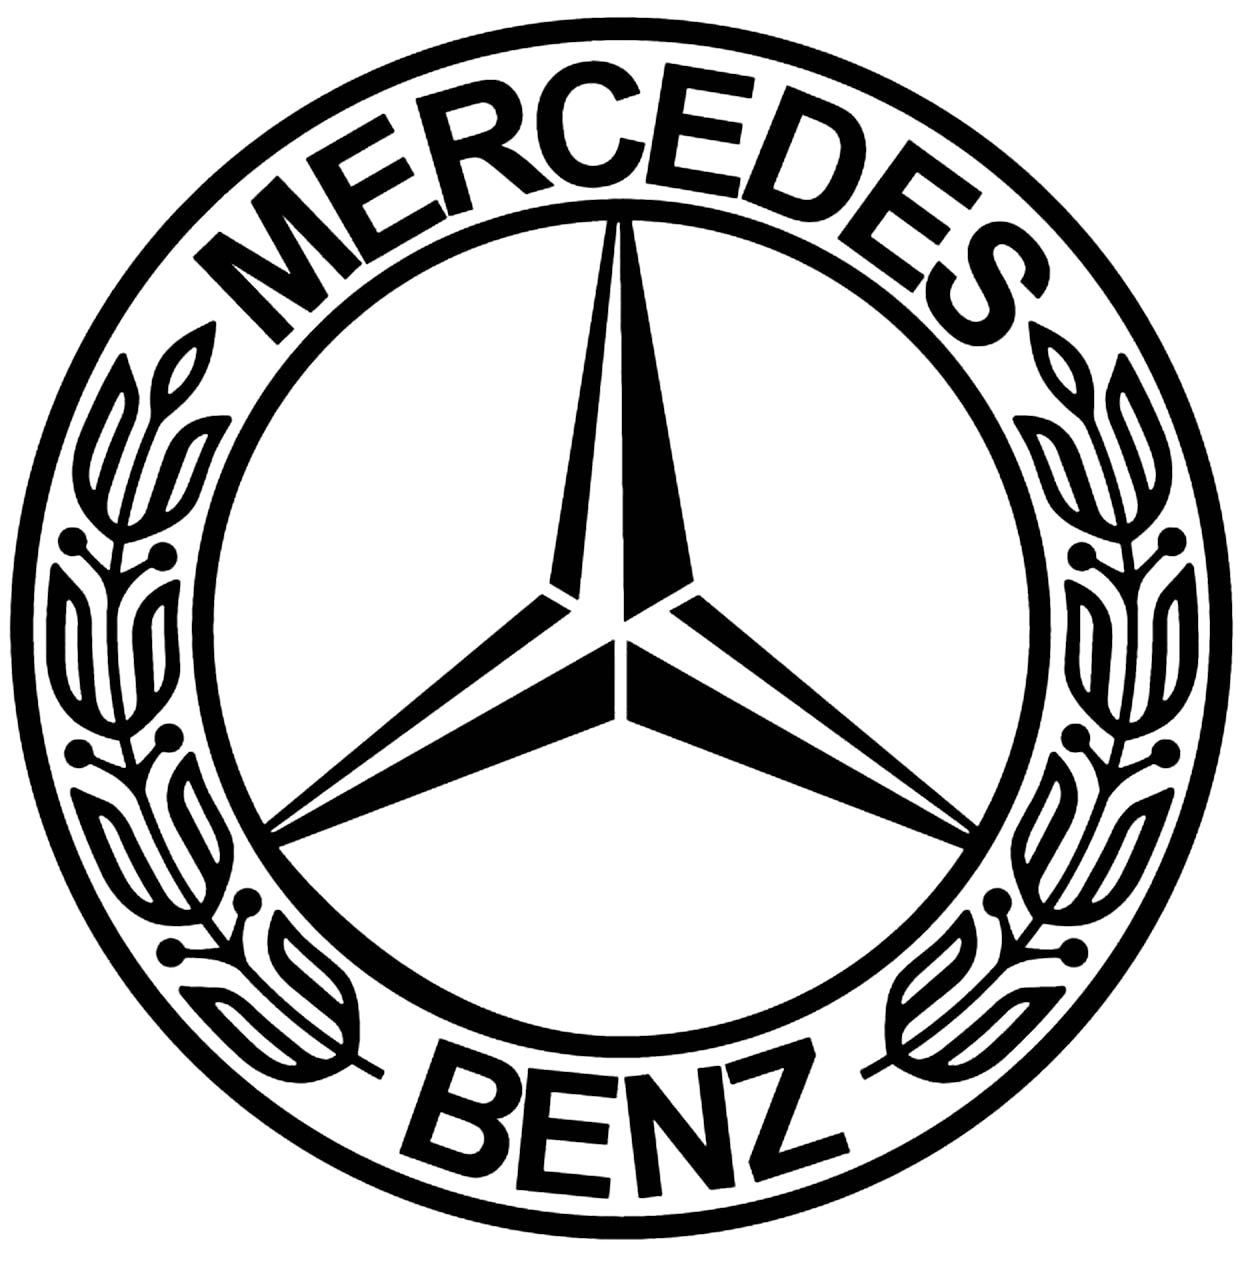 mercedes benz logo transparent background